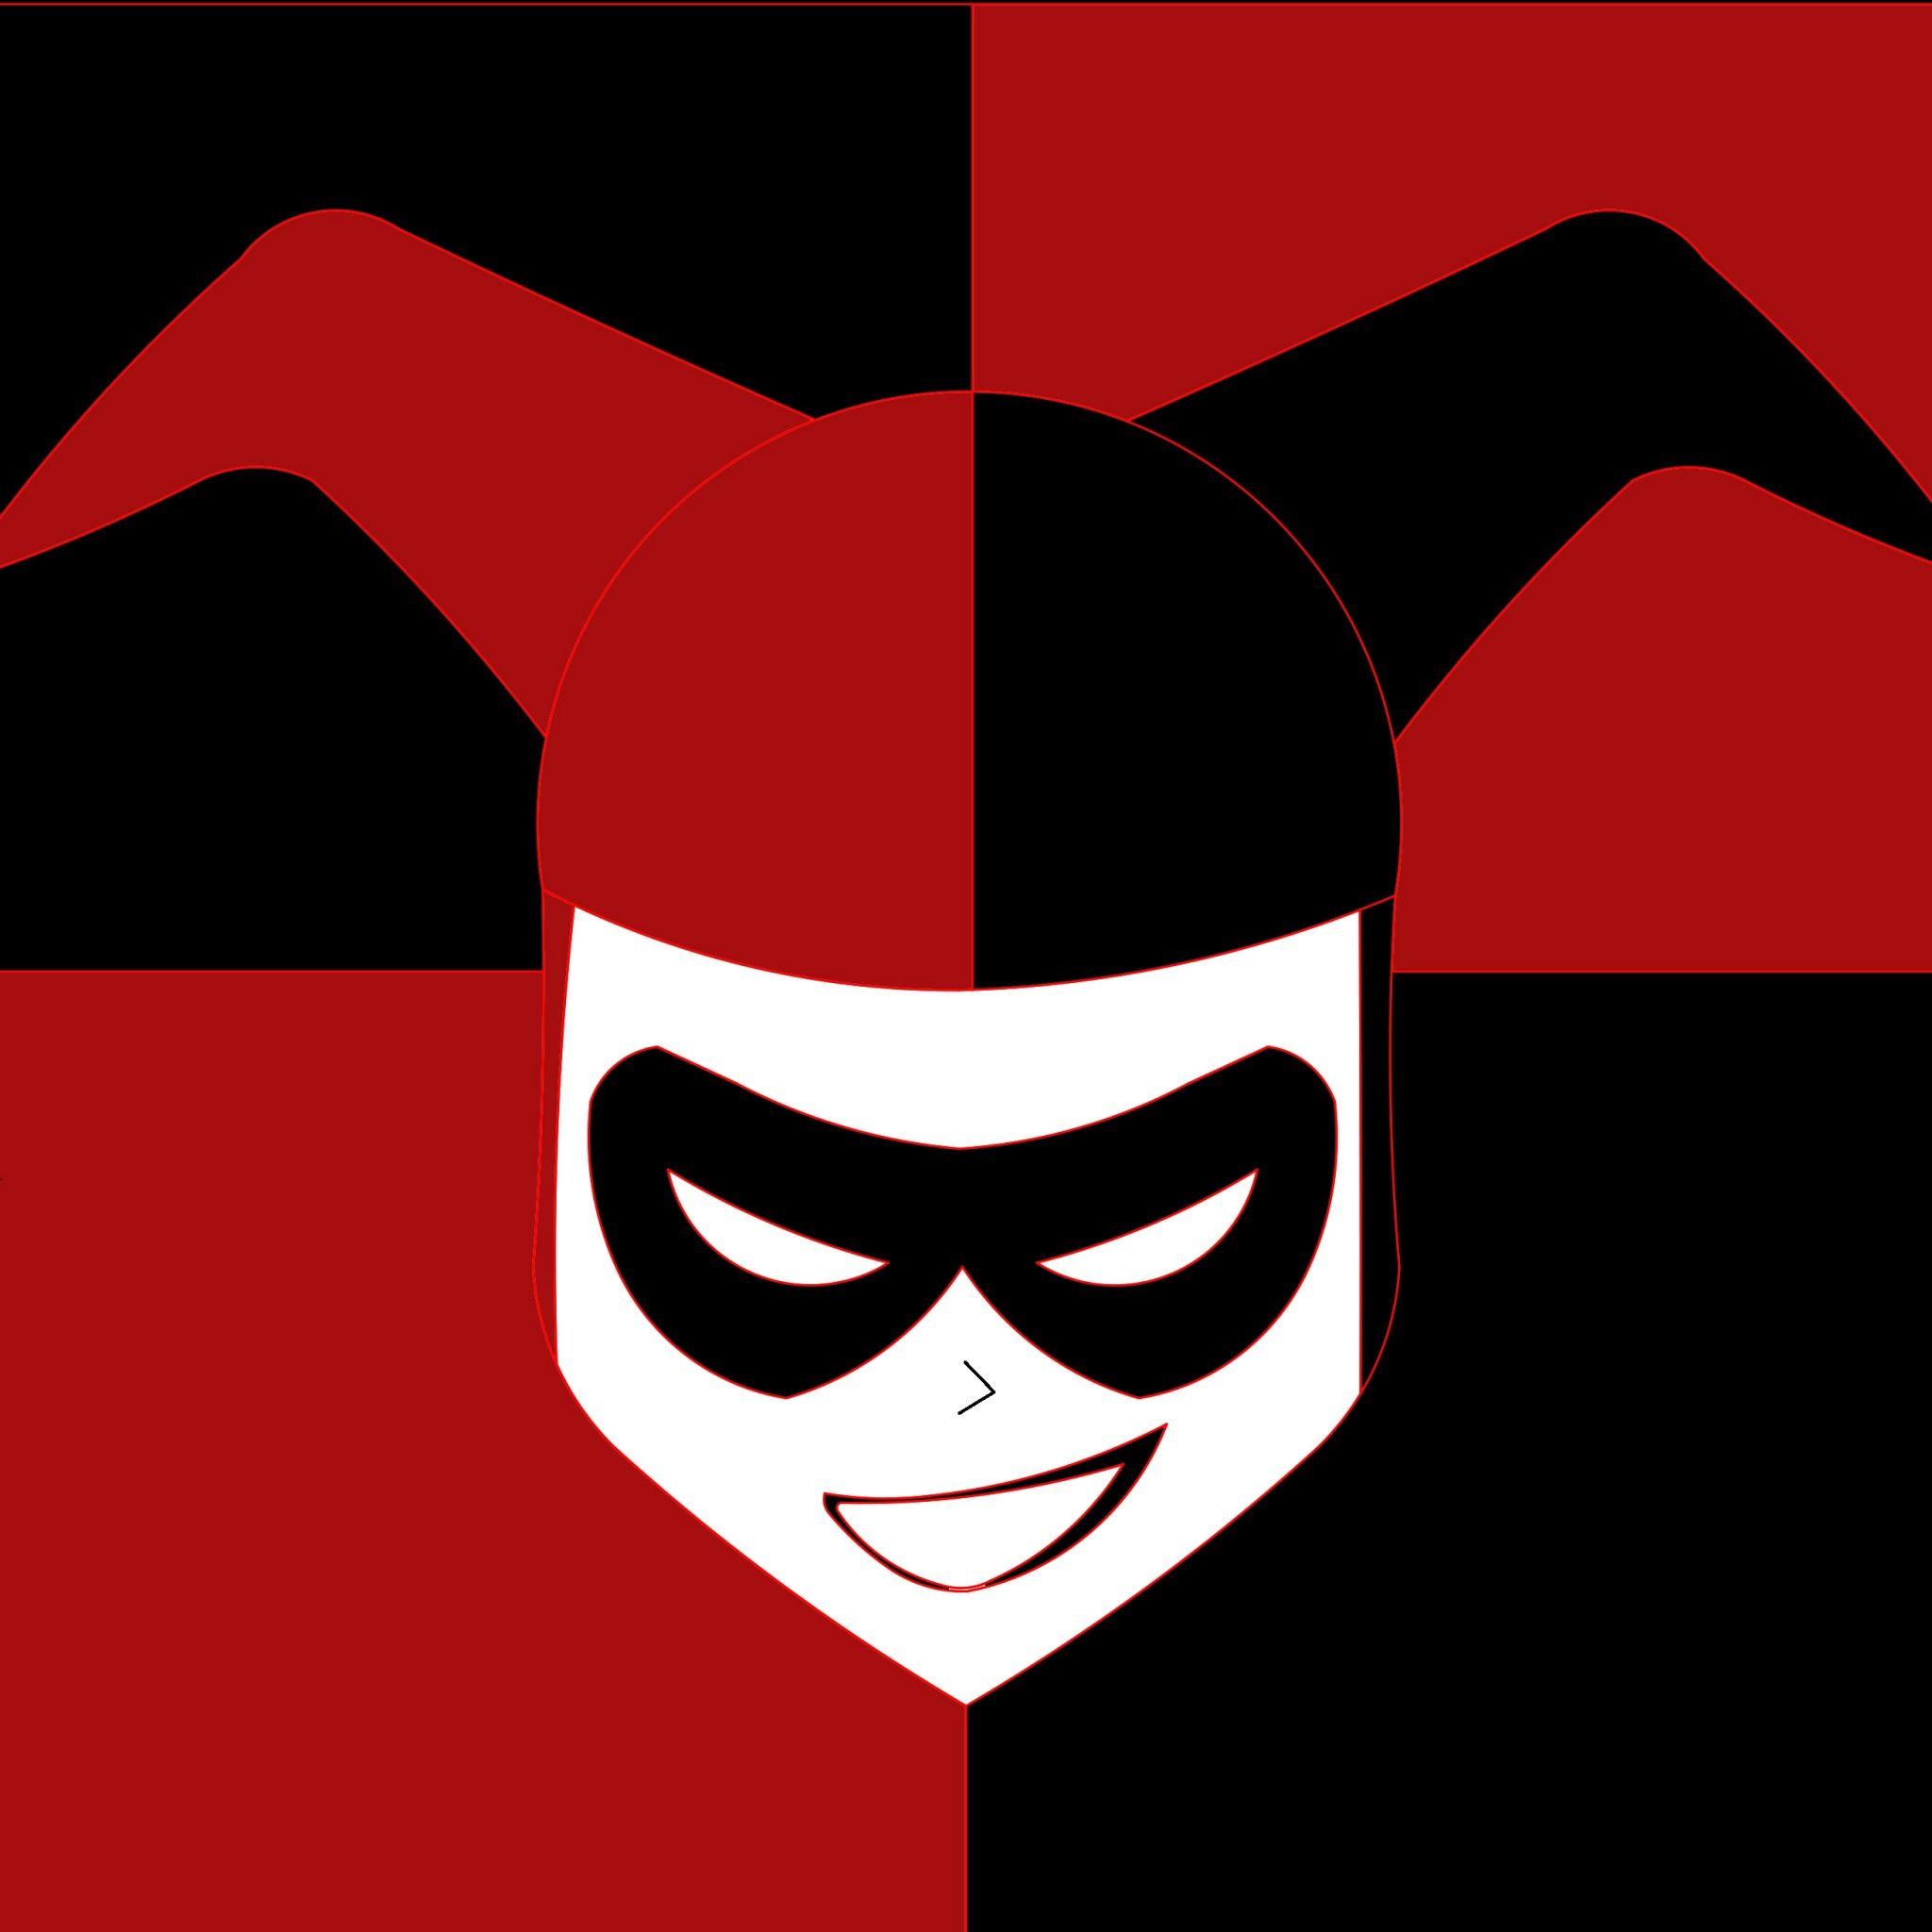 Harley Quinn Logo - Download Harley Quinn Logo 2048 x 2048 Wallpaper